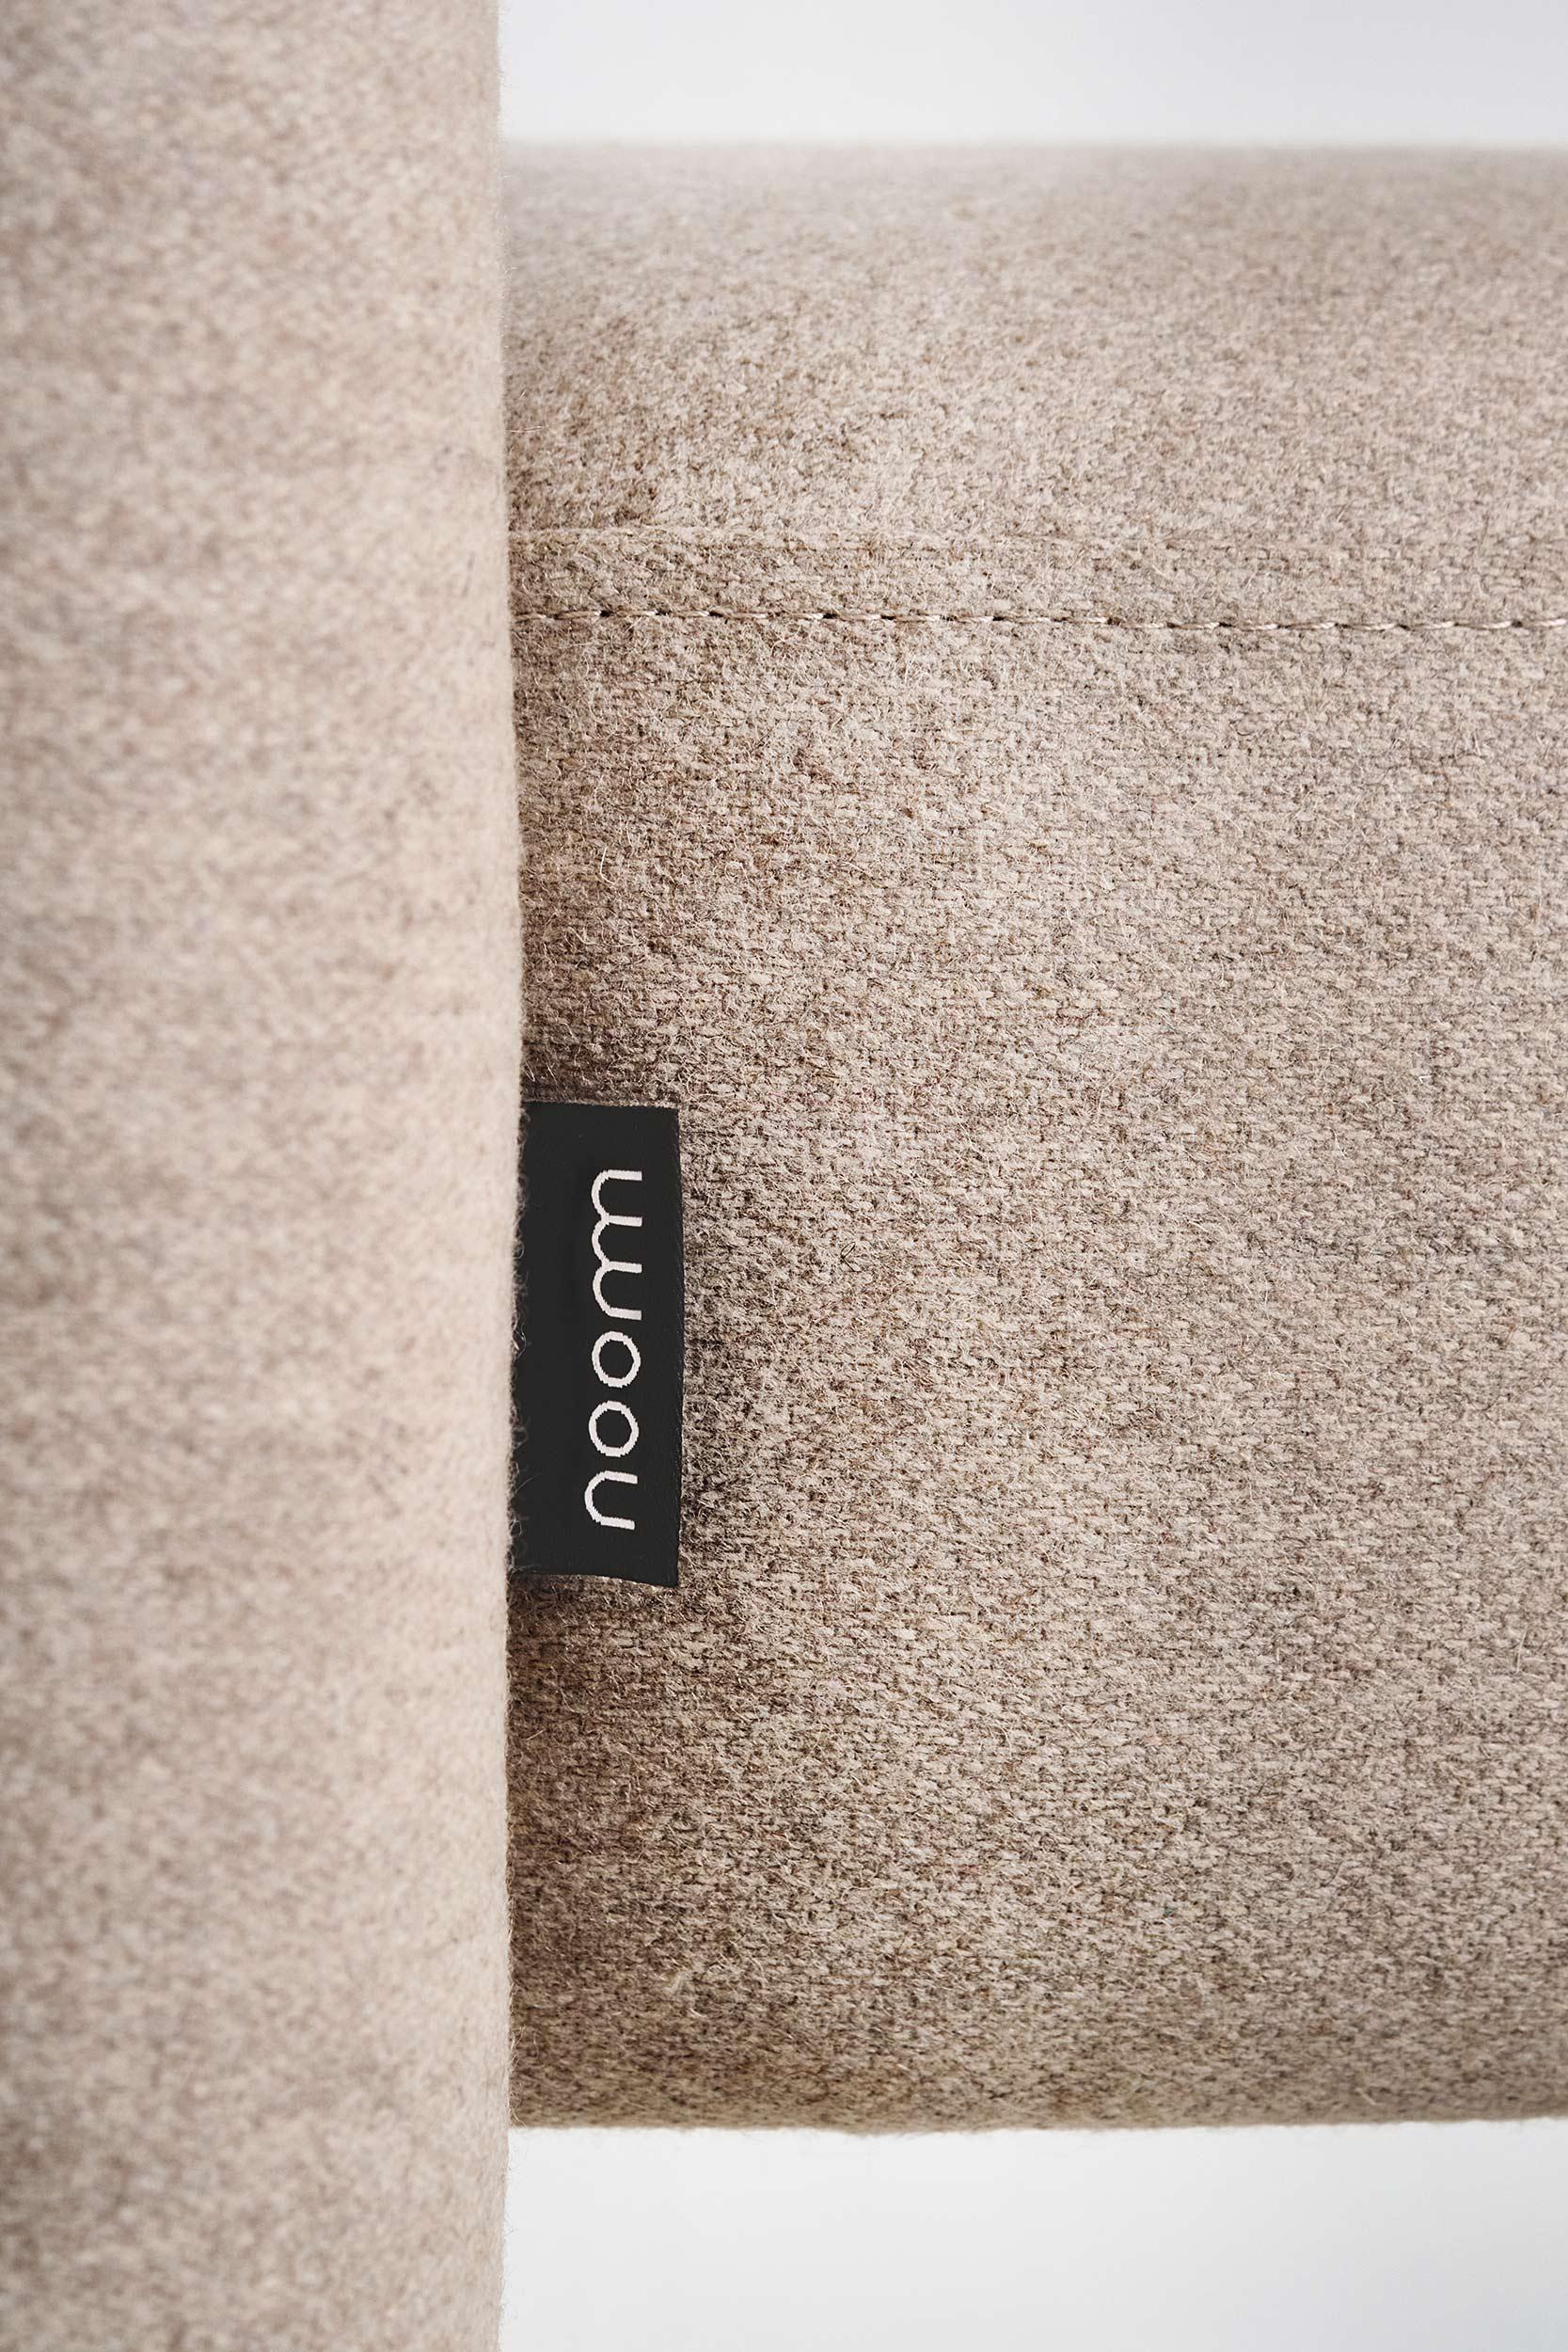 Modern Sofa Gropius CS1 in Various Fabrics by Noom 9